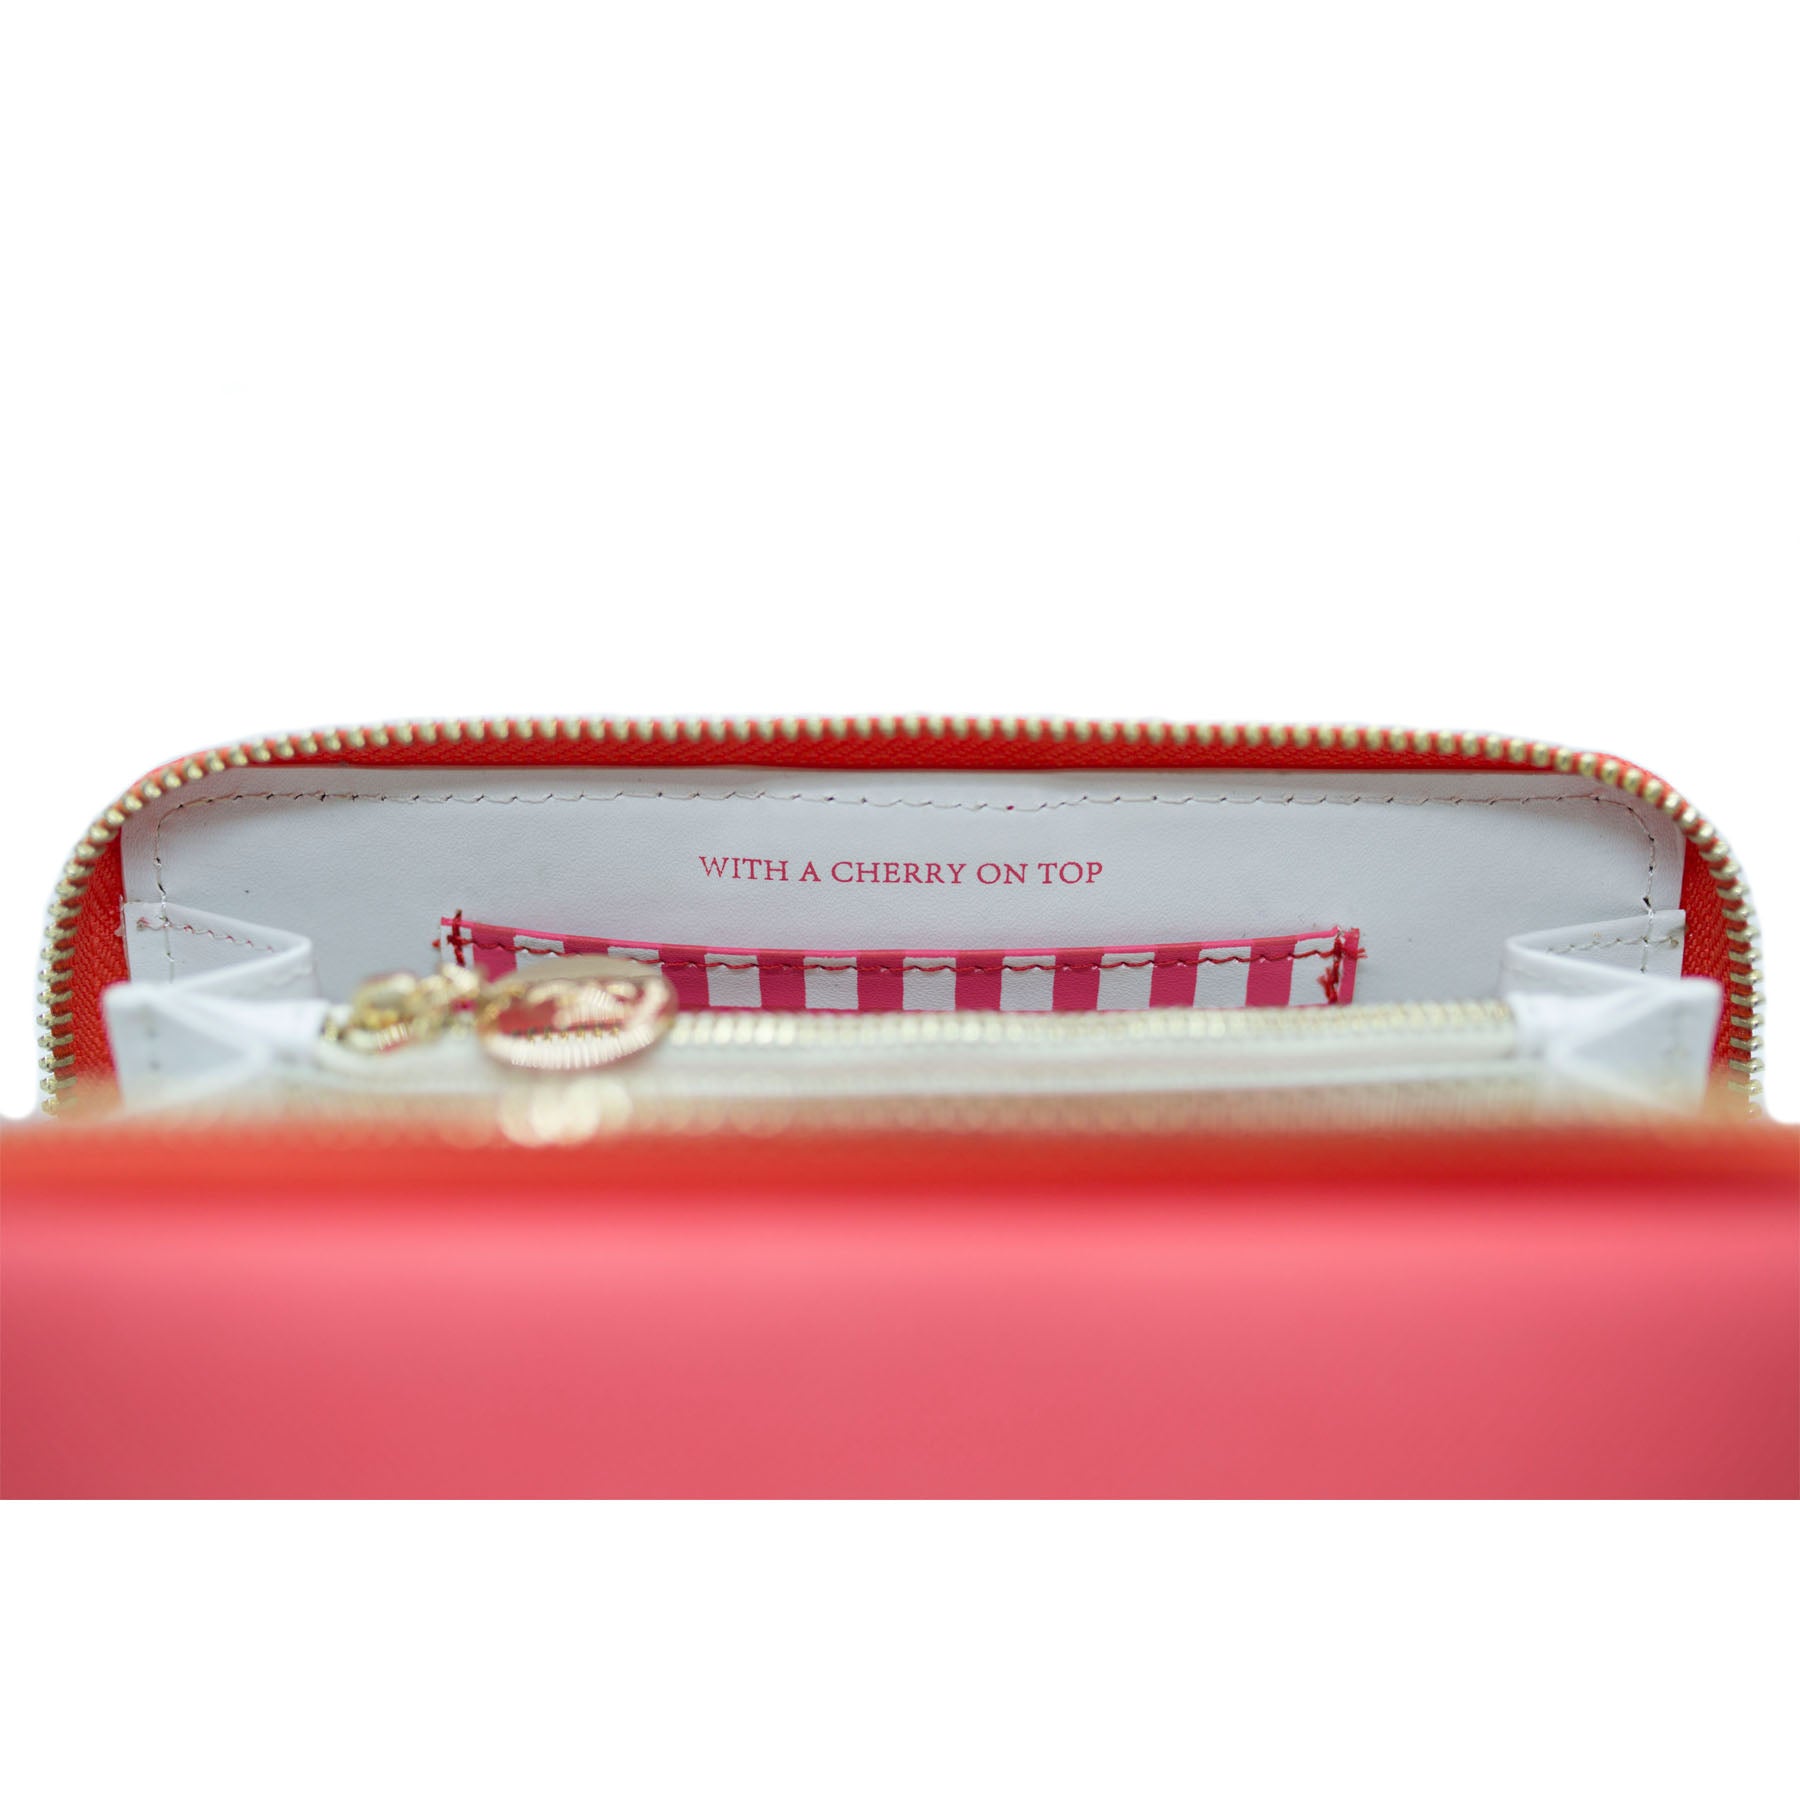 Nylon Wallet in Cherry Red